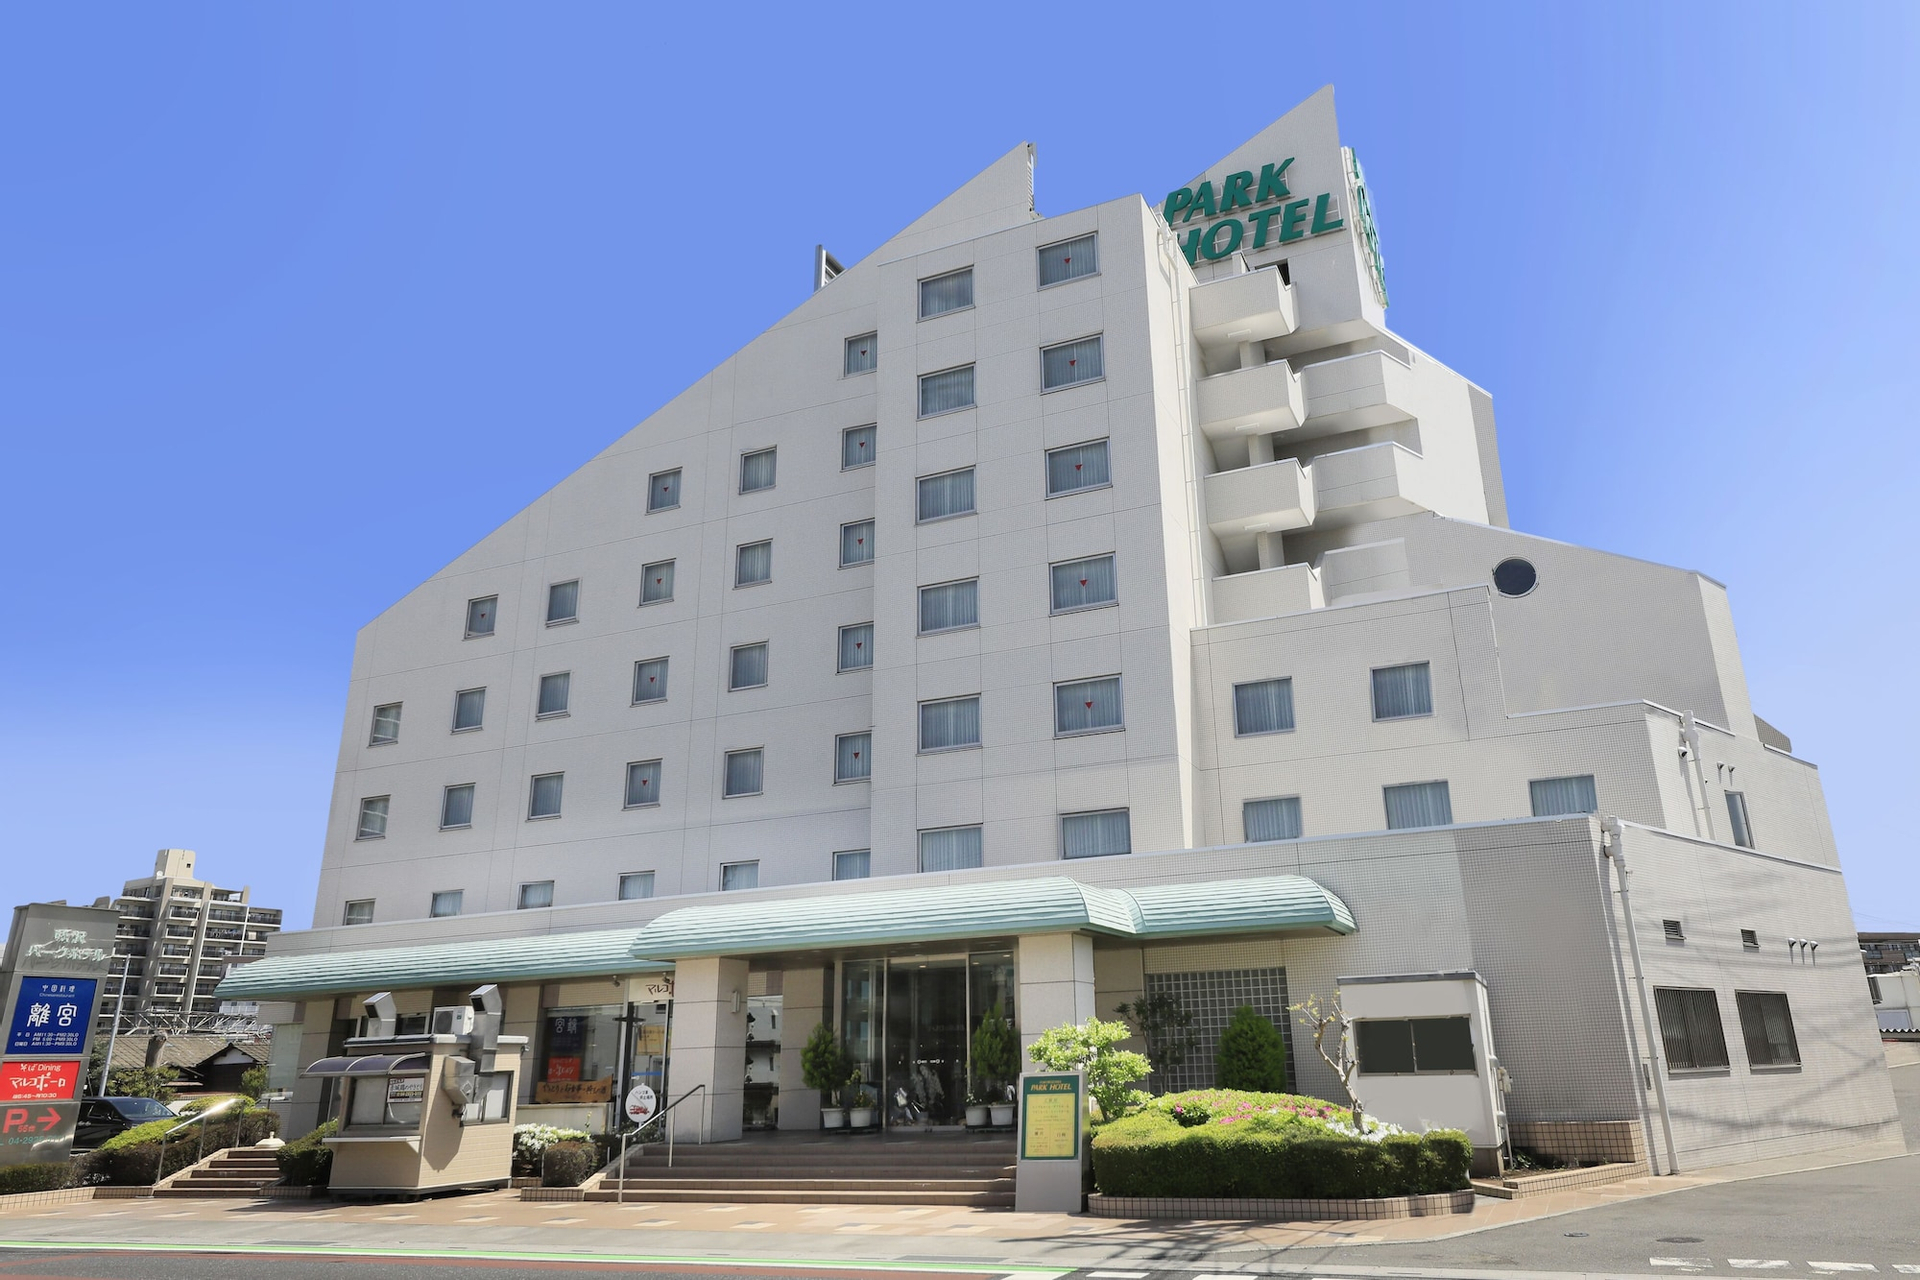 Exterior & Views 1, Tokorozawa Park Hotel, Tokorozawa